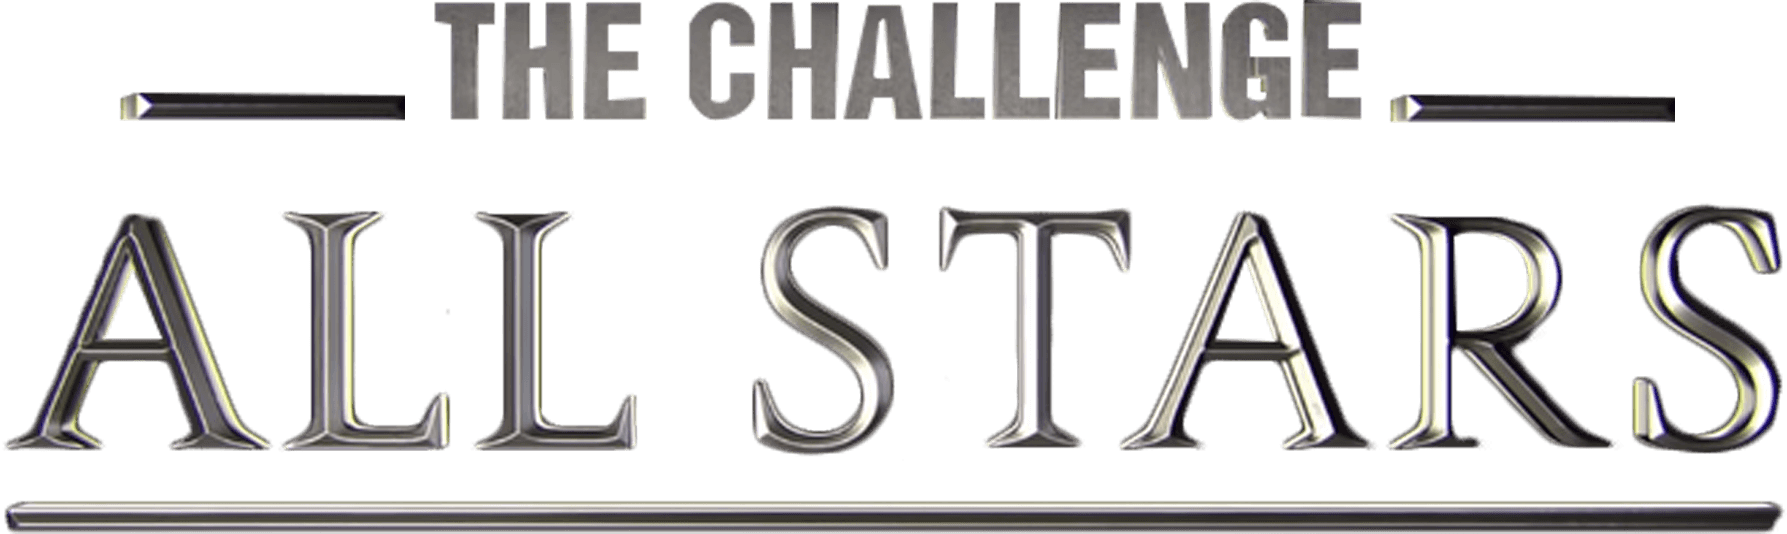 The Challenge: All Stars logo